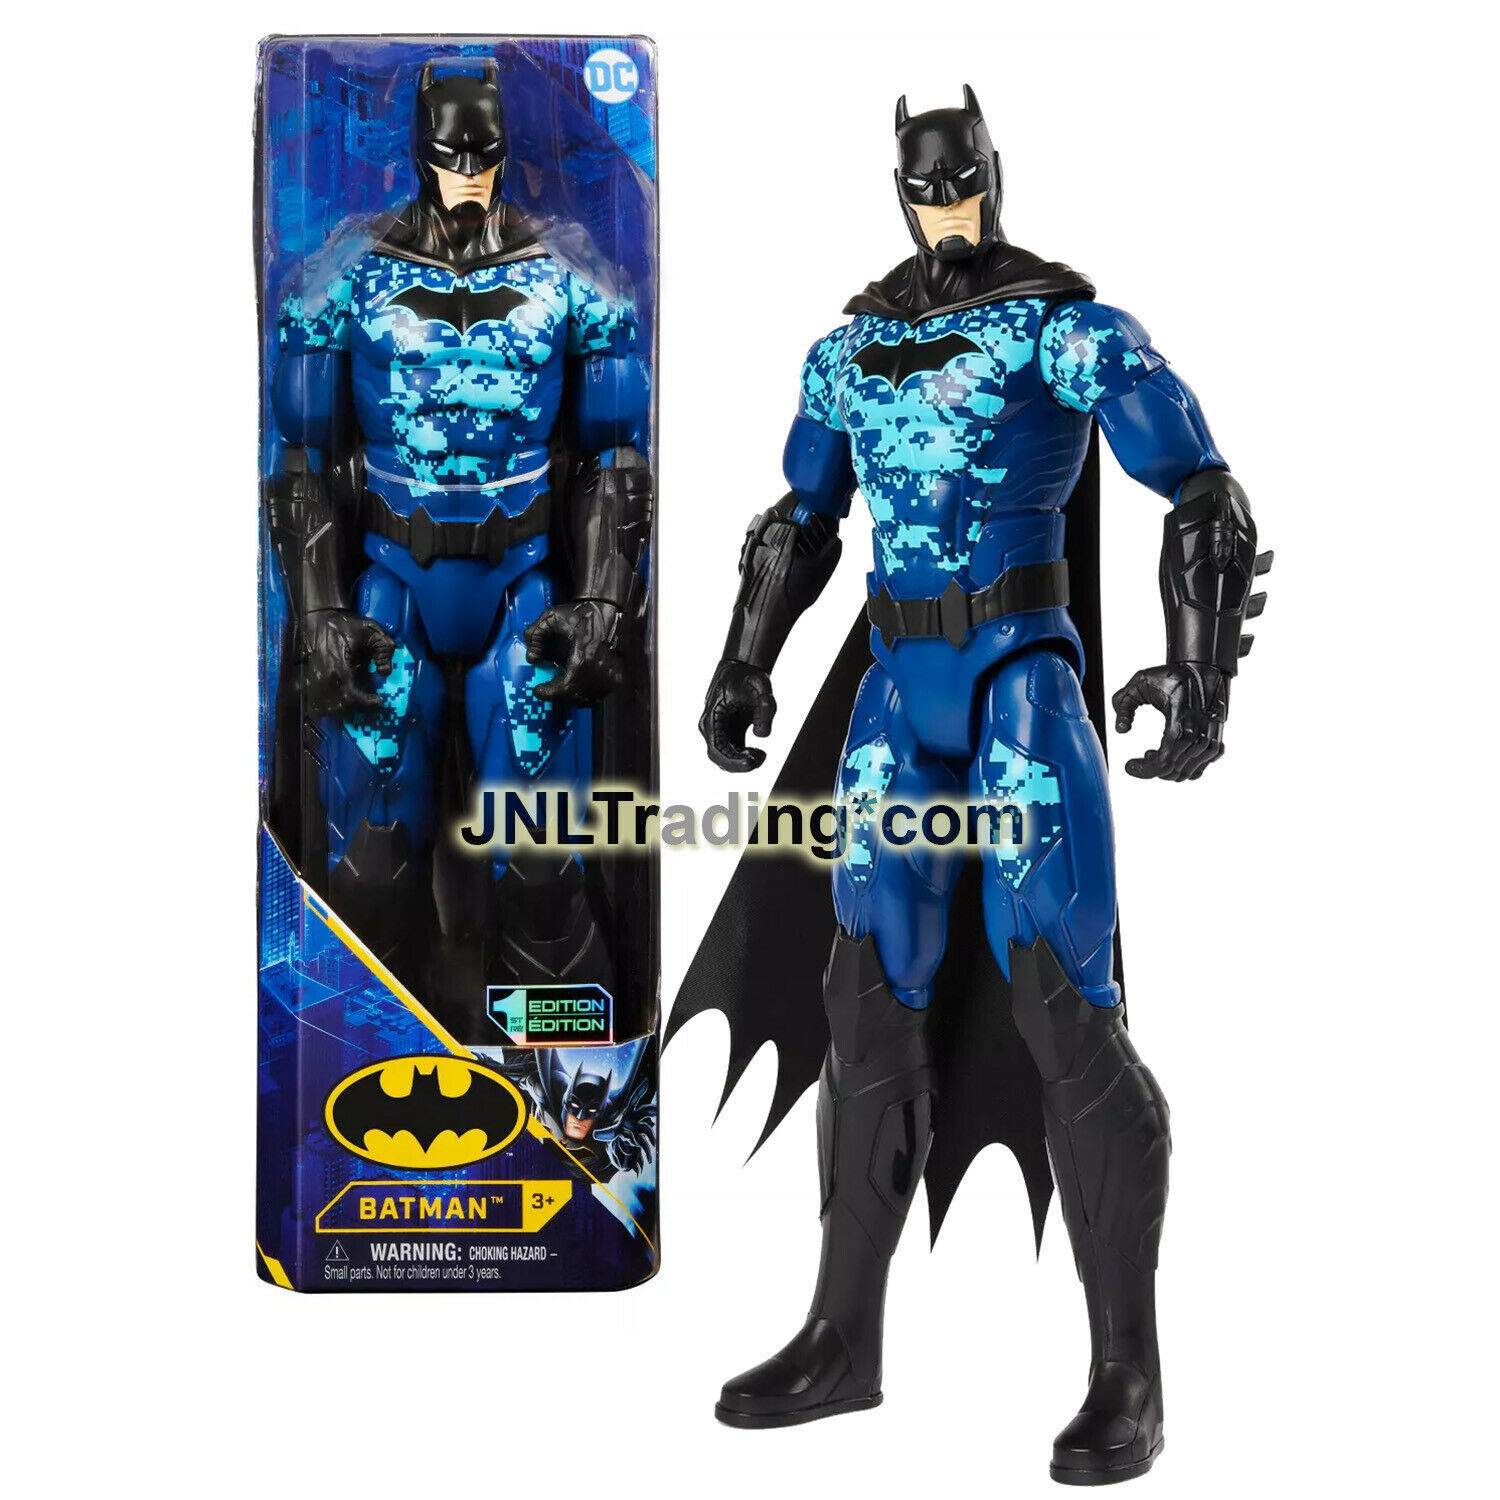 Primary image for Year 2020 DC Comics Batman Series 12 Inch Tall Action Figure - Blue Camo BATMAN